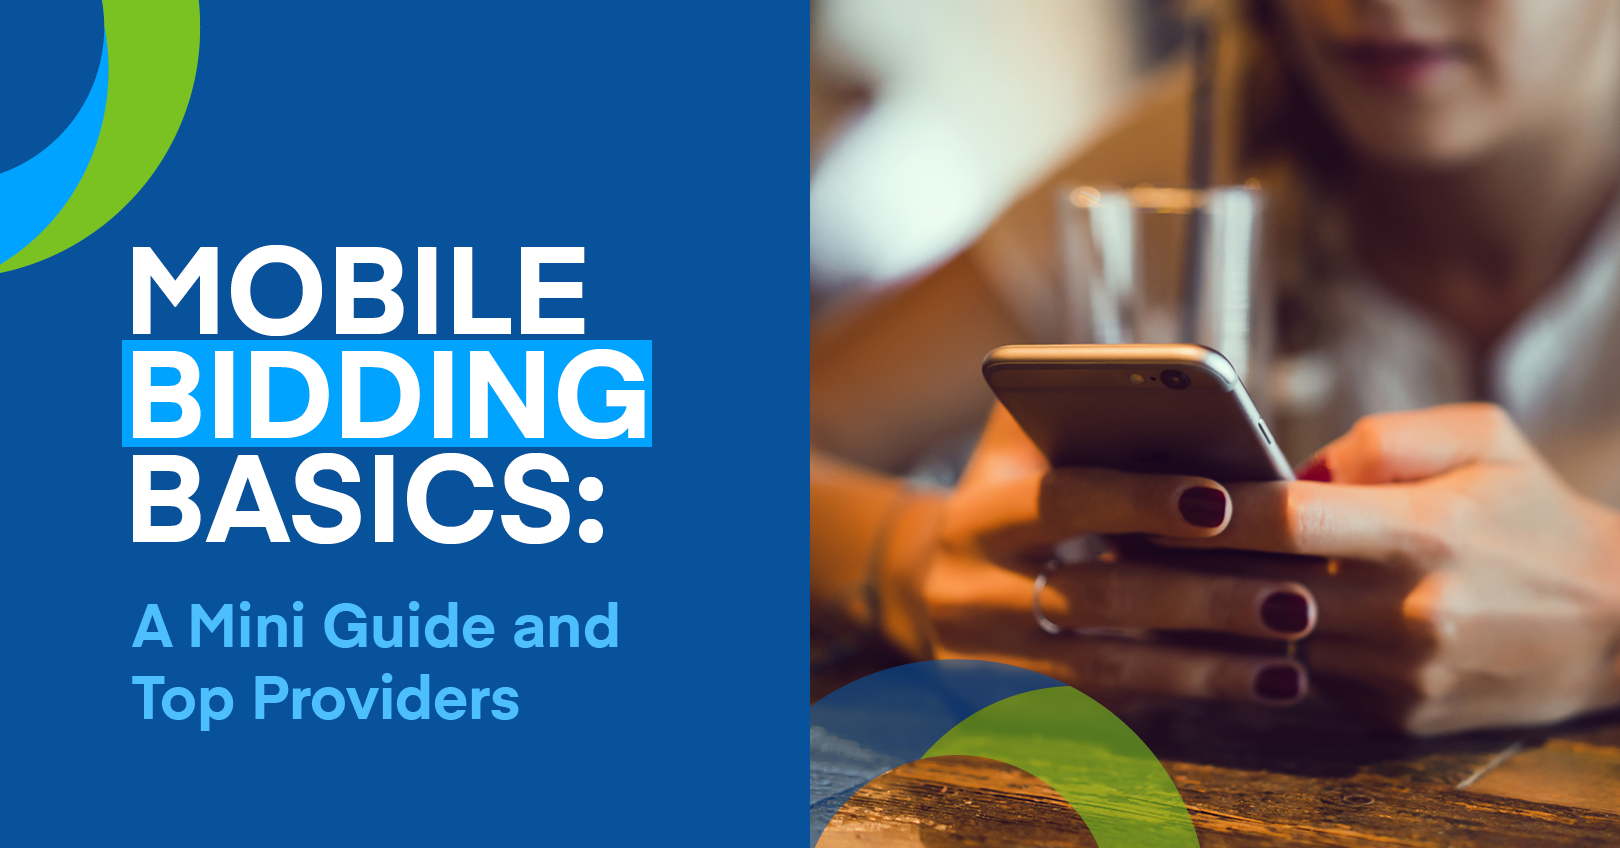 Mobile Bidding Basics: A Mini Guide and 10 Top Providers